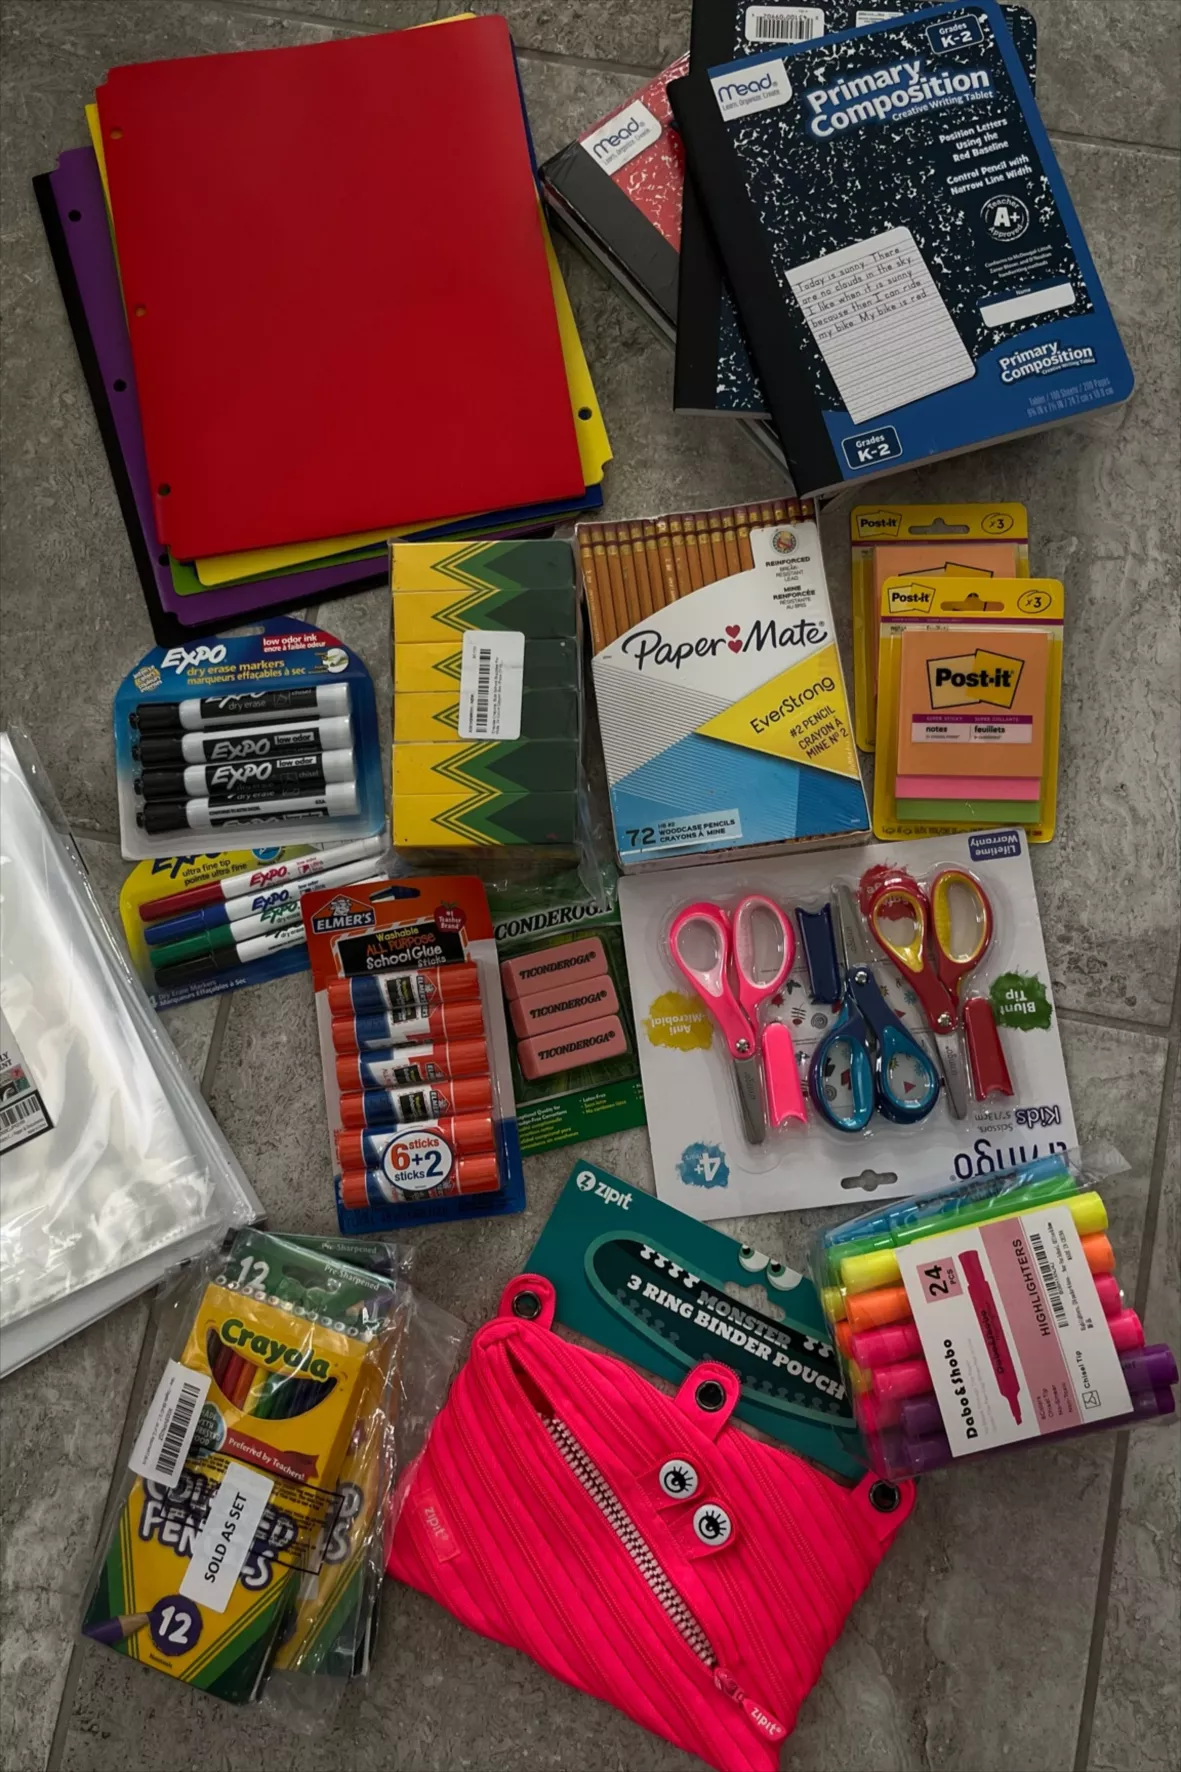 Crayola Crayons, Bulk School Supplies For Kids, 24 Count Crayon